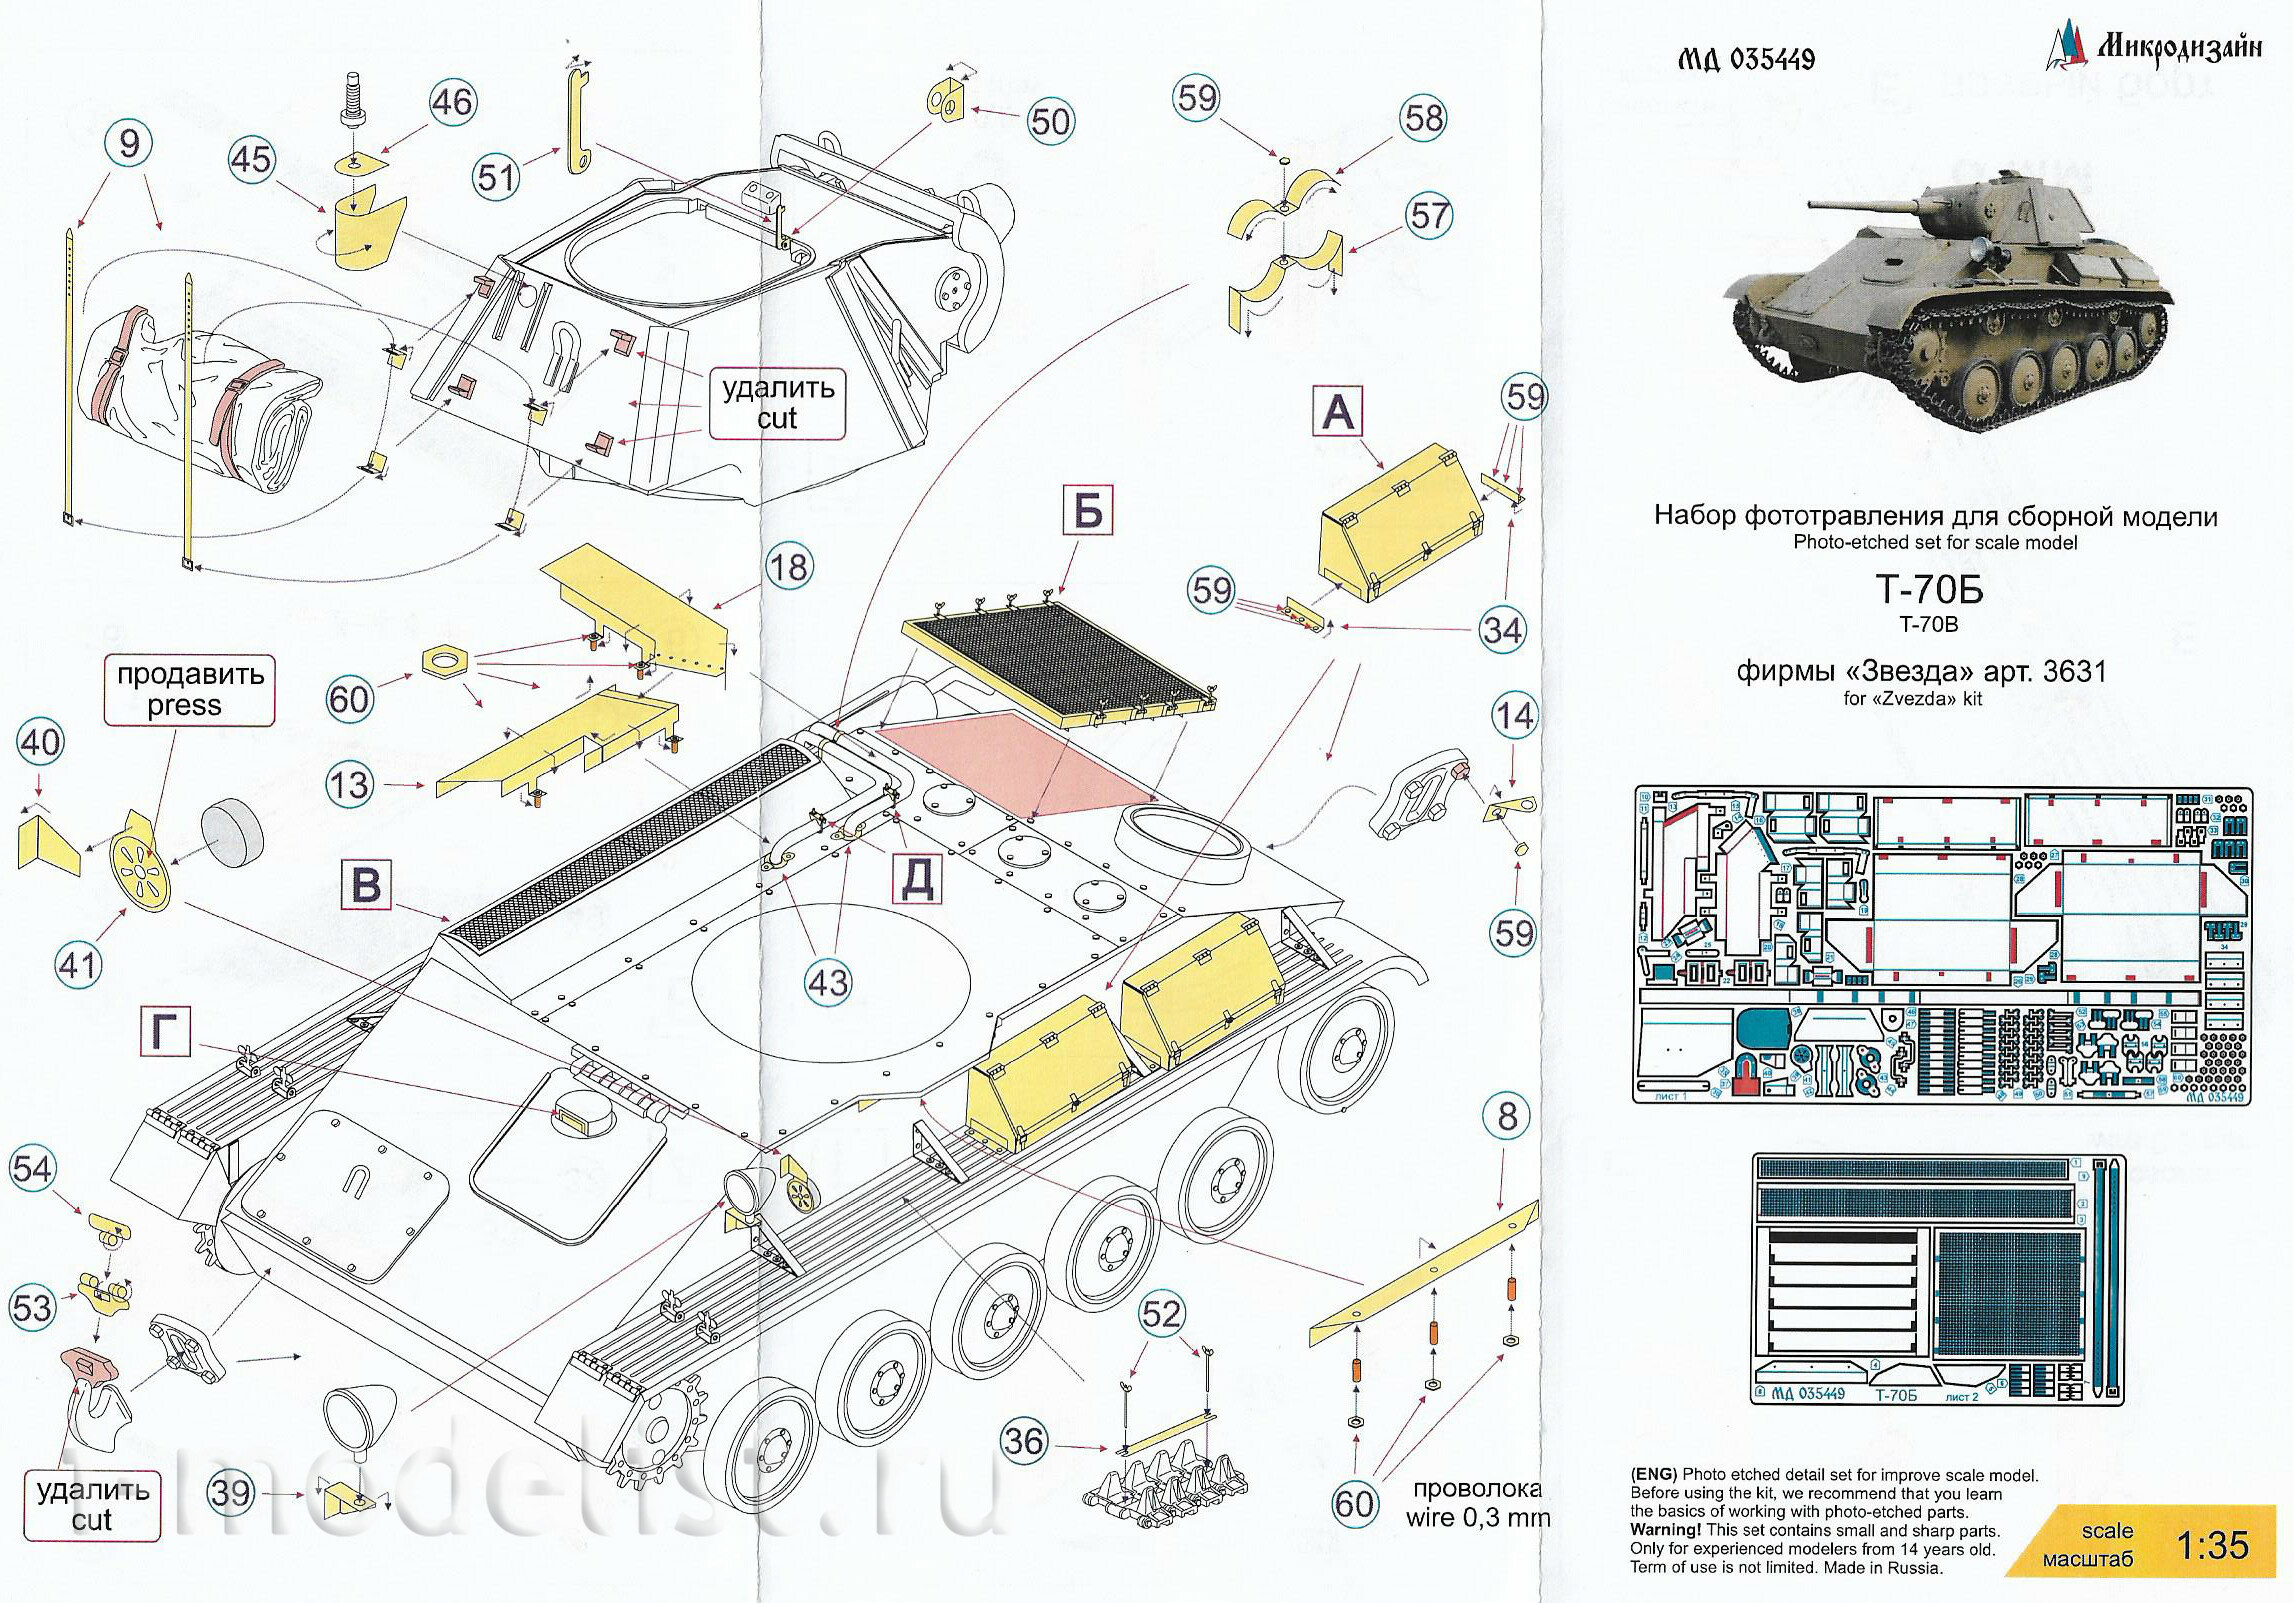 035449 Micro Design 1/35 Photo Etching Kit for T-70B tank (Zvezda)